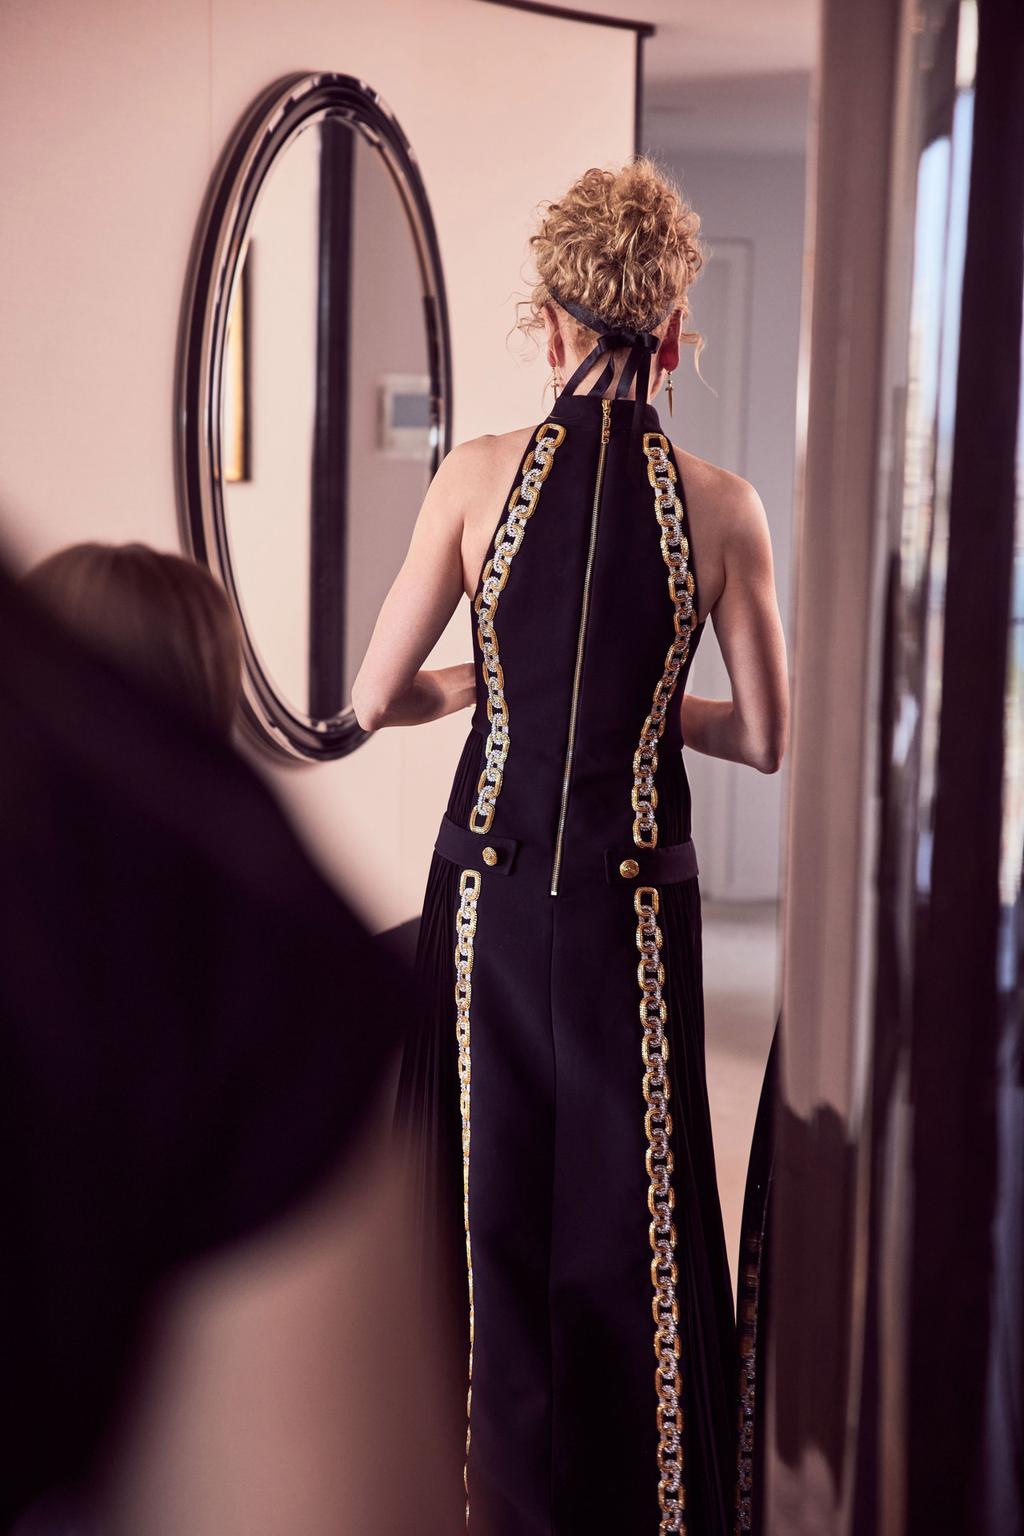 Nicole Kidman in a custom Louis Vuitton dress and shoes